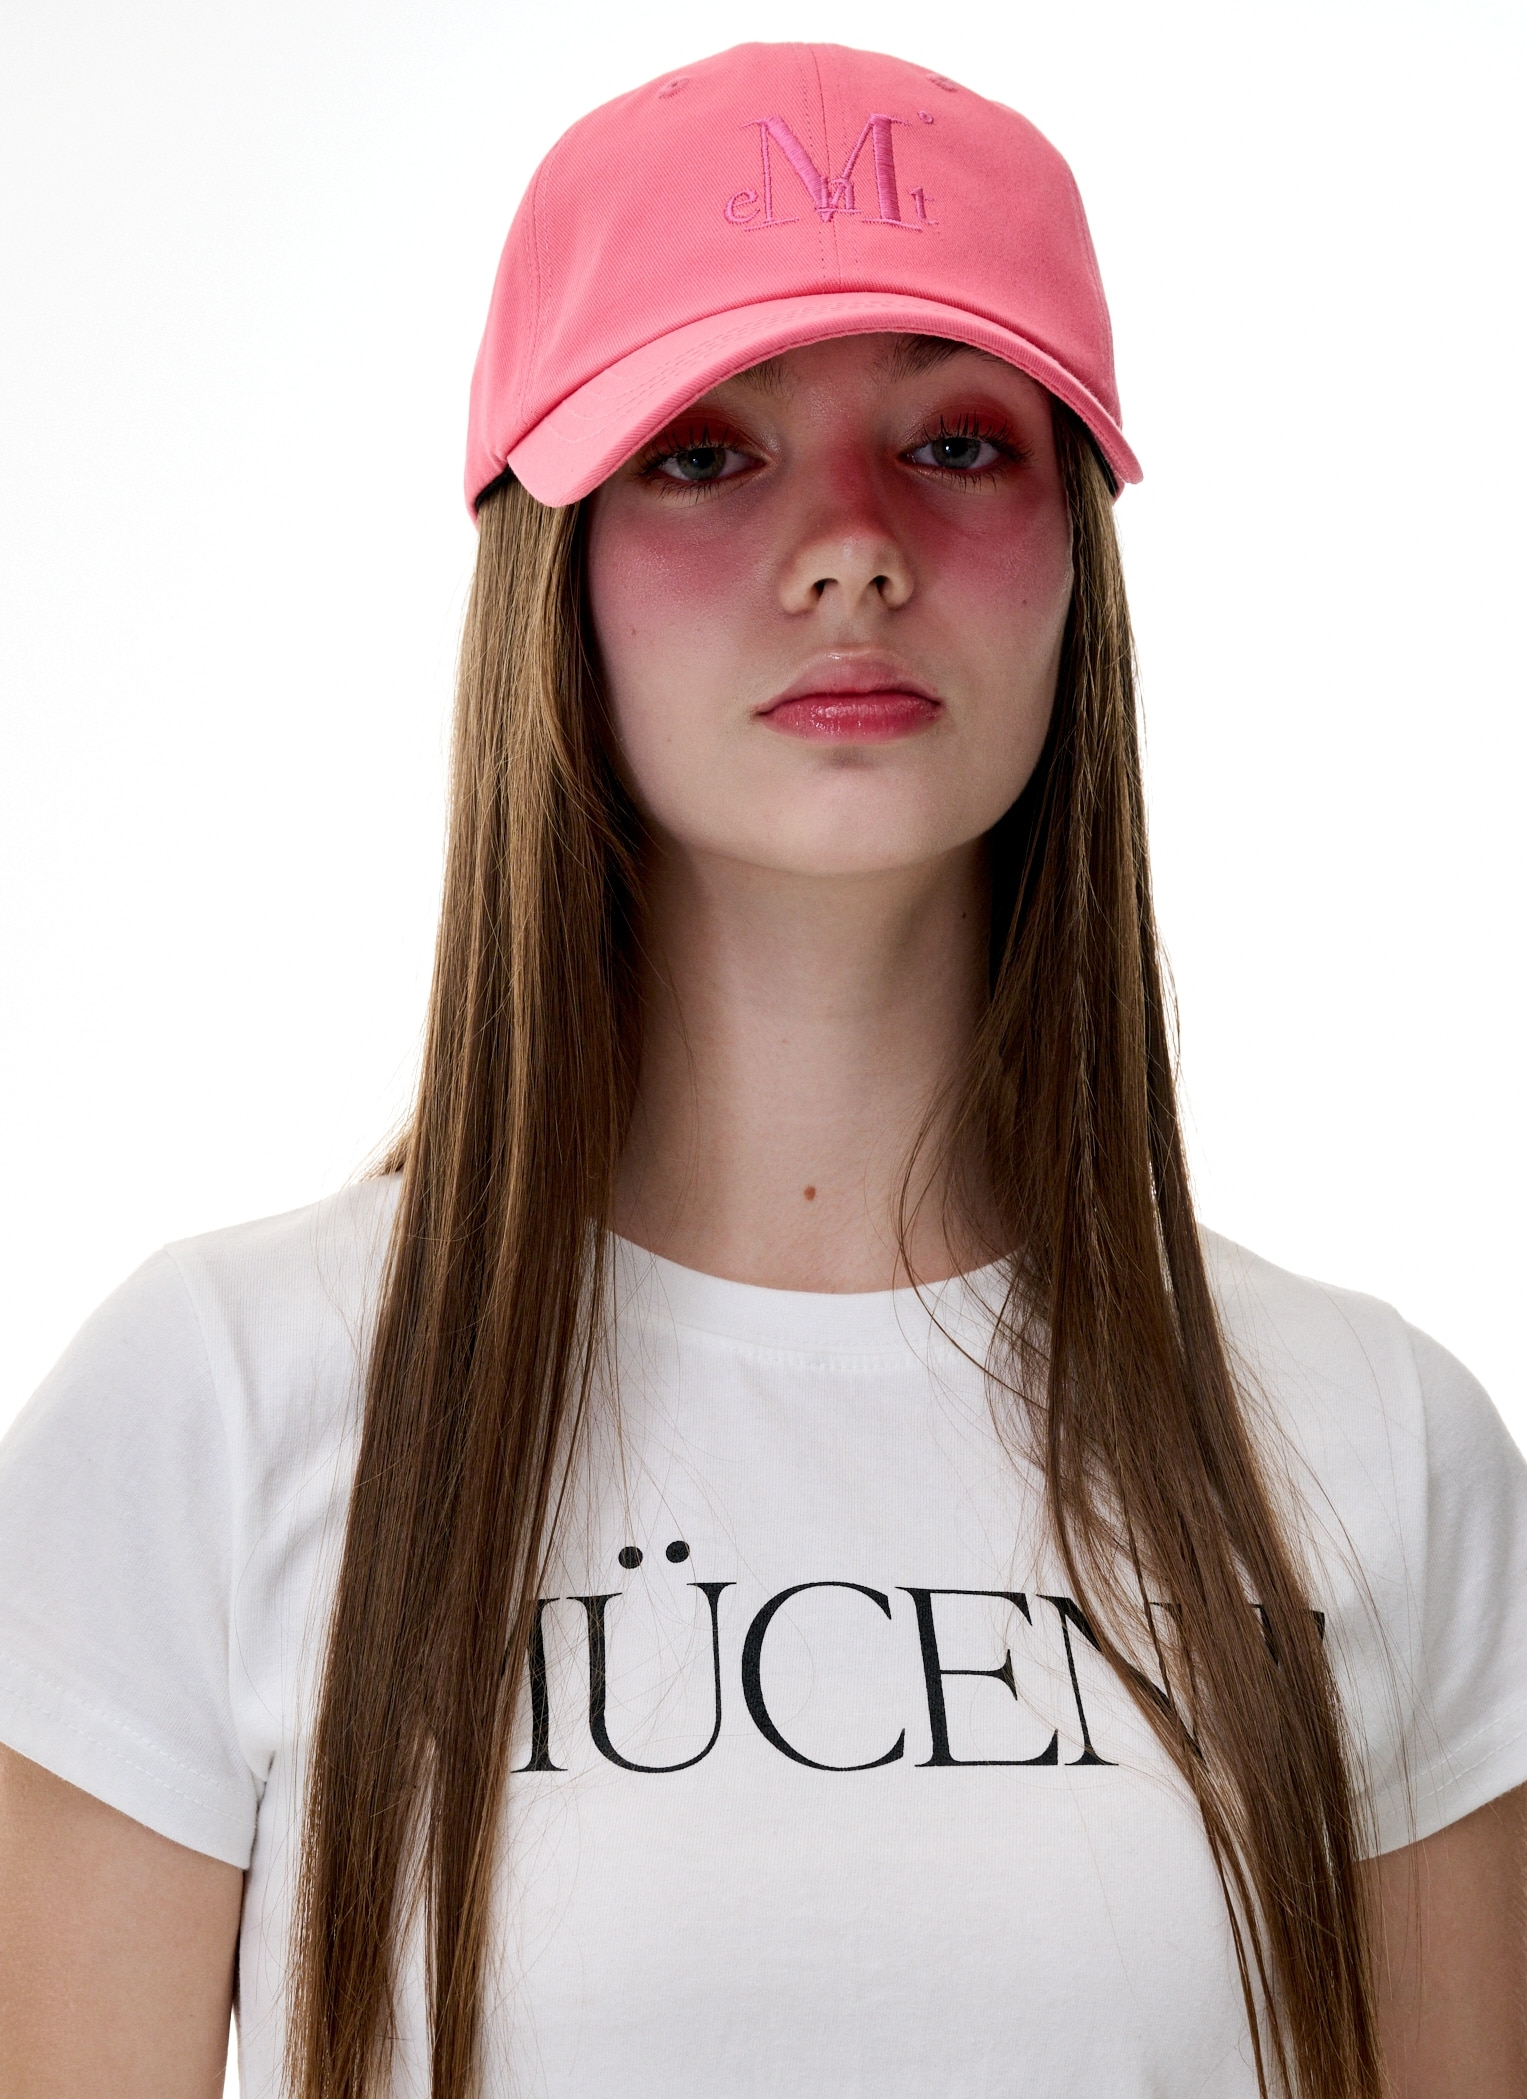 MUCENT BALL CAP - 무센트 볼캡 (Coral pink)